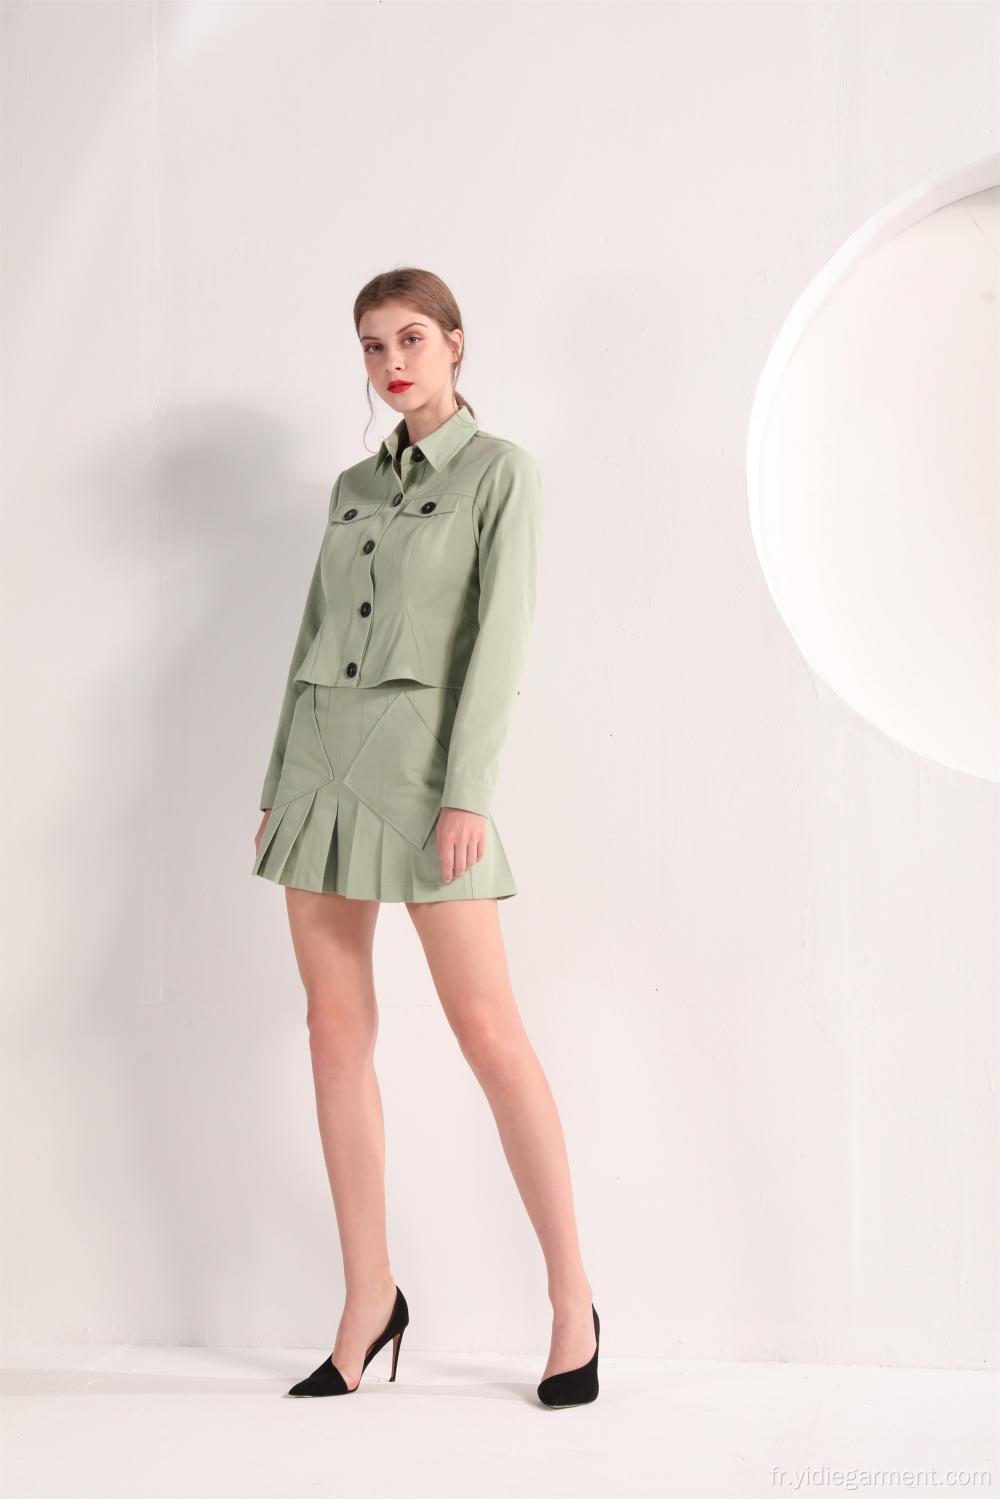 Veste femme vert olive et mini jupe plissée